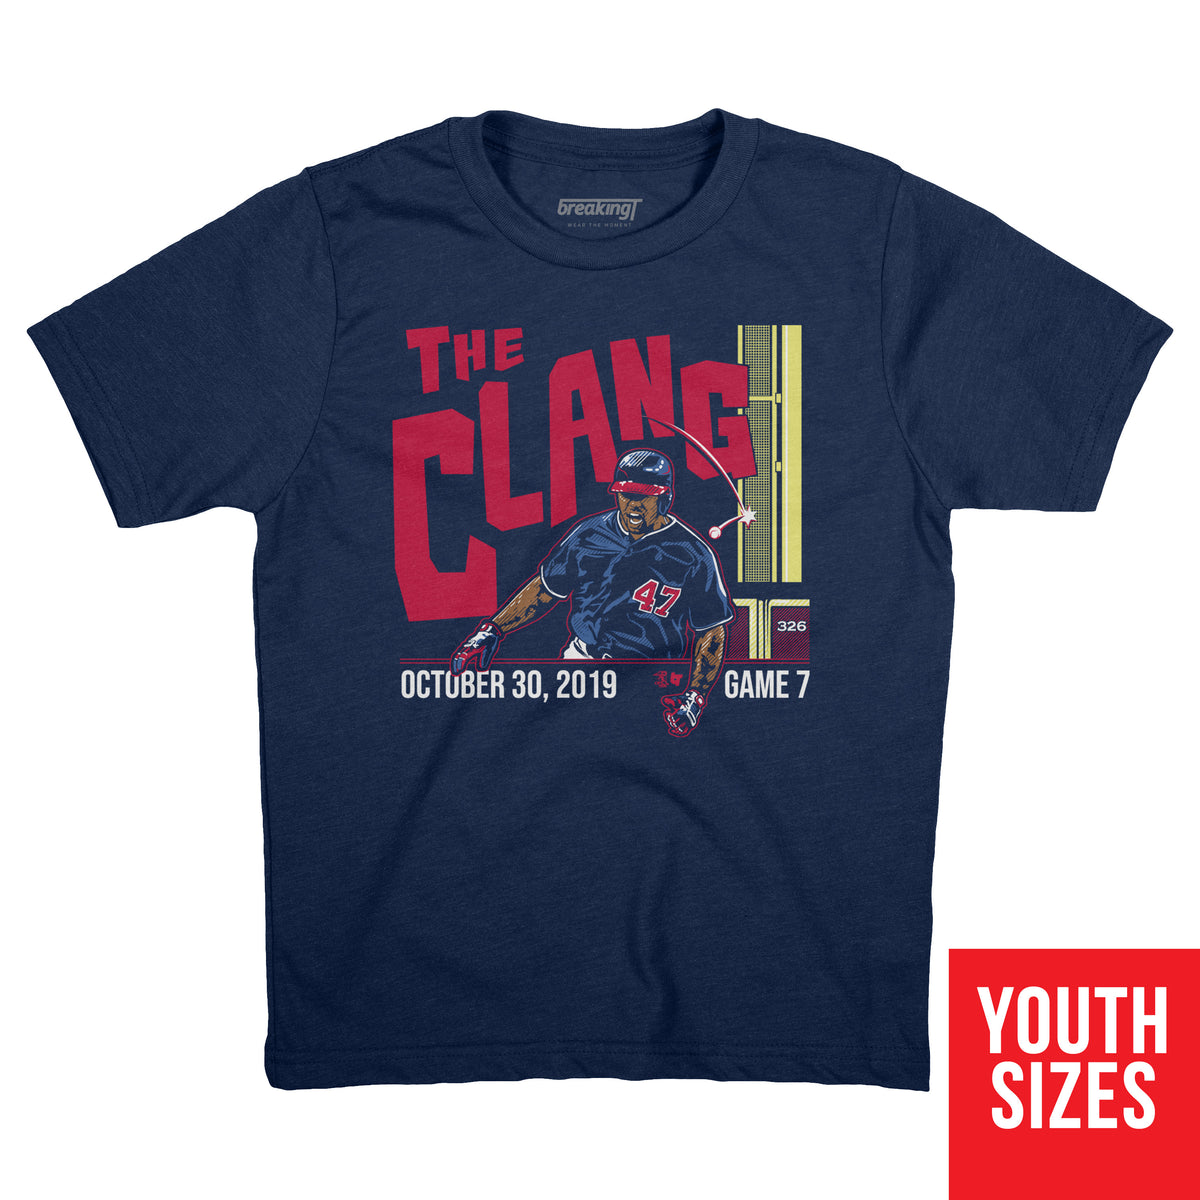 The Clang Shirt - Howie Kendrick, Washington, MLBPA Licensed - BreakingT